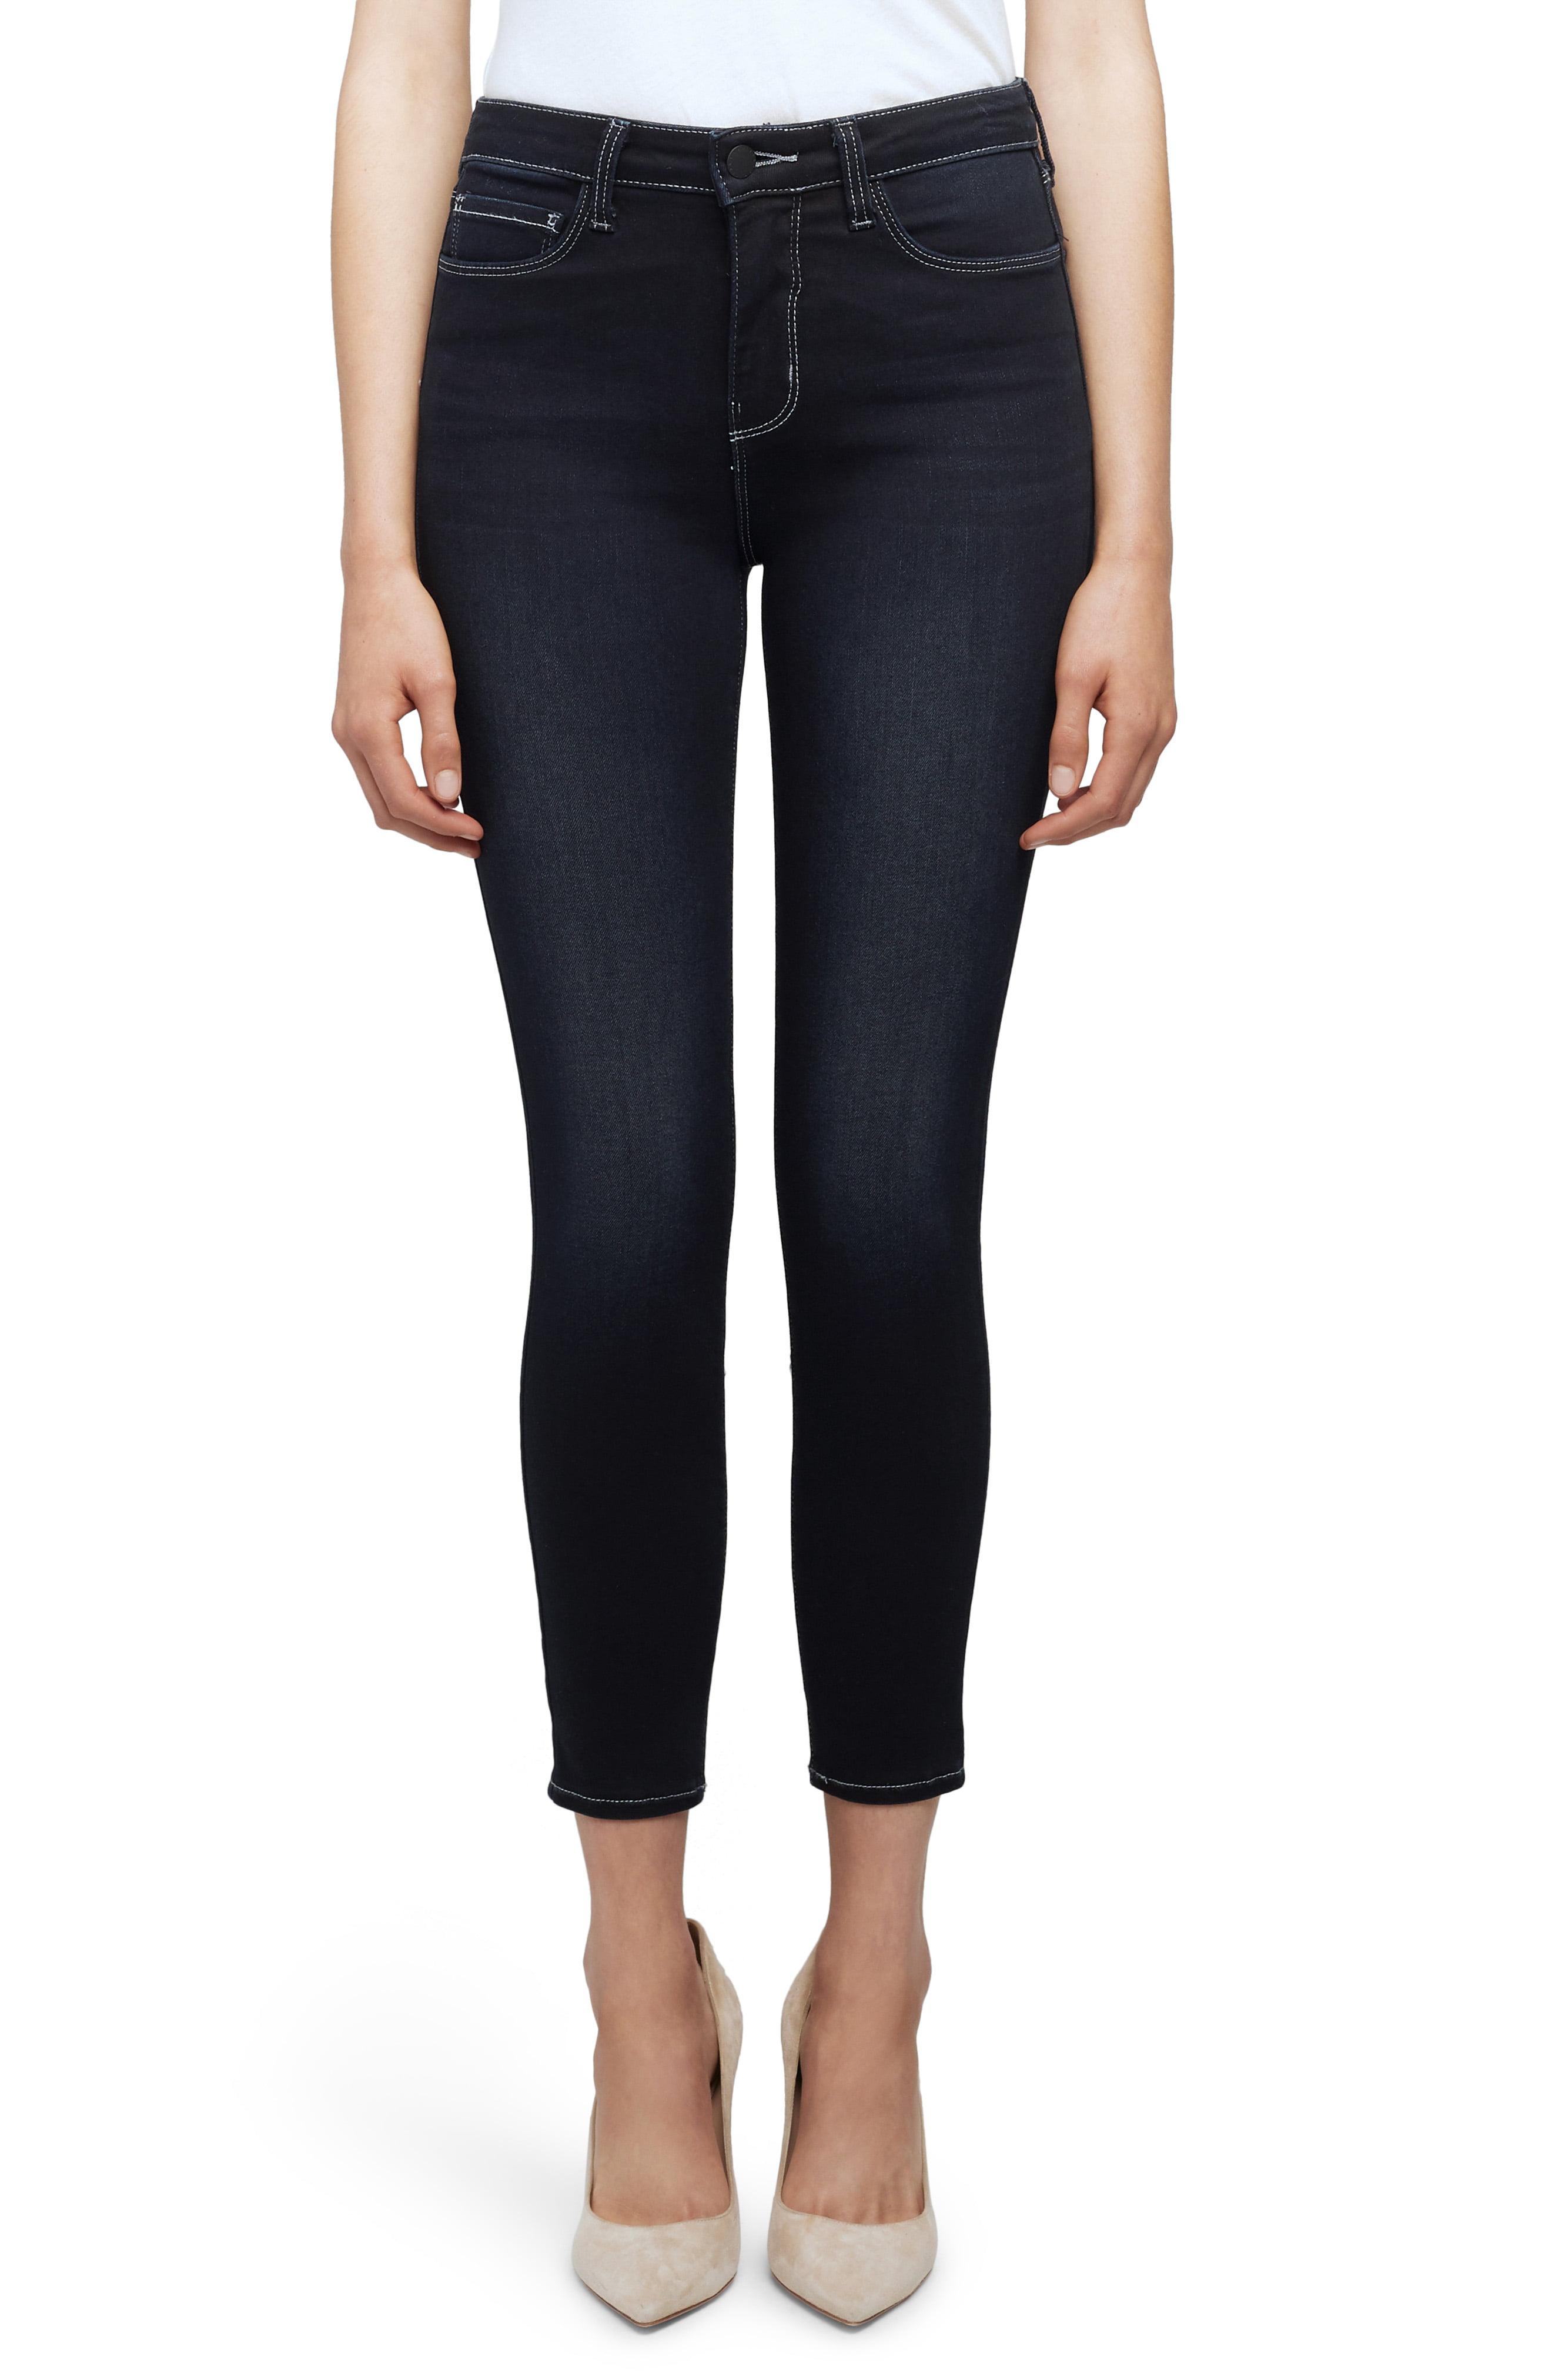 L'Agence Denim Margot High Waist Crop Skinny Jeans in Black - Lyst